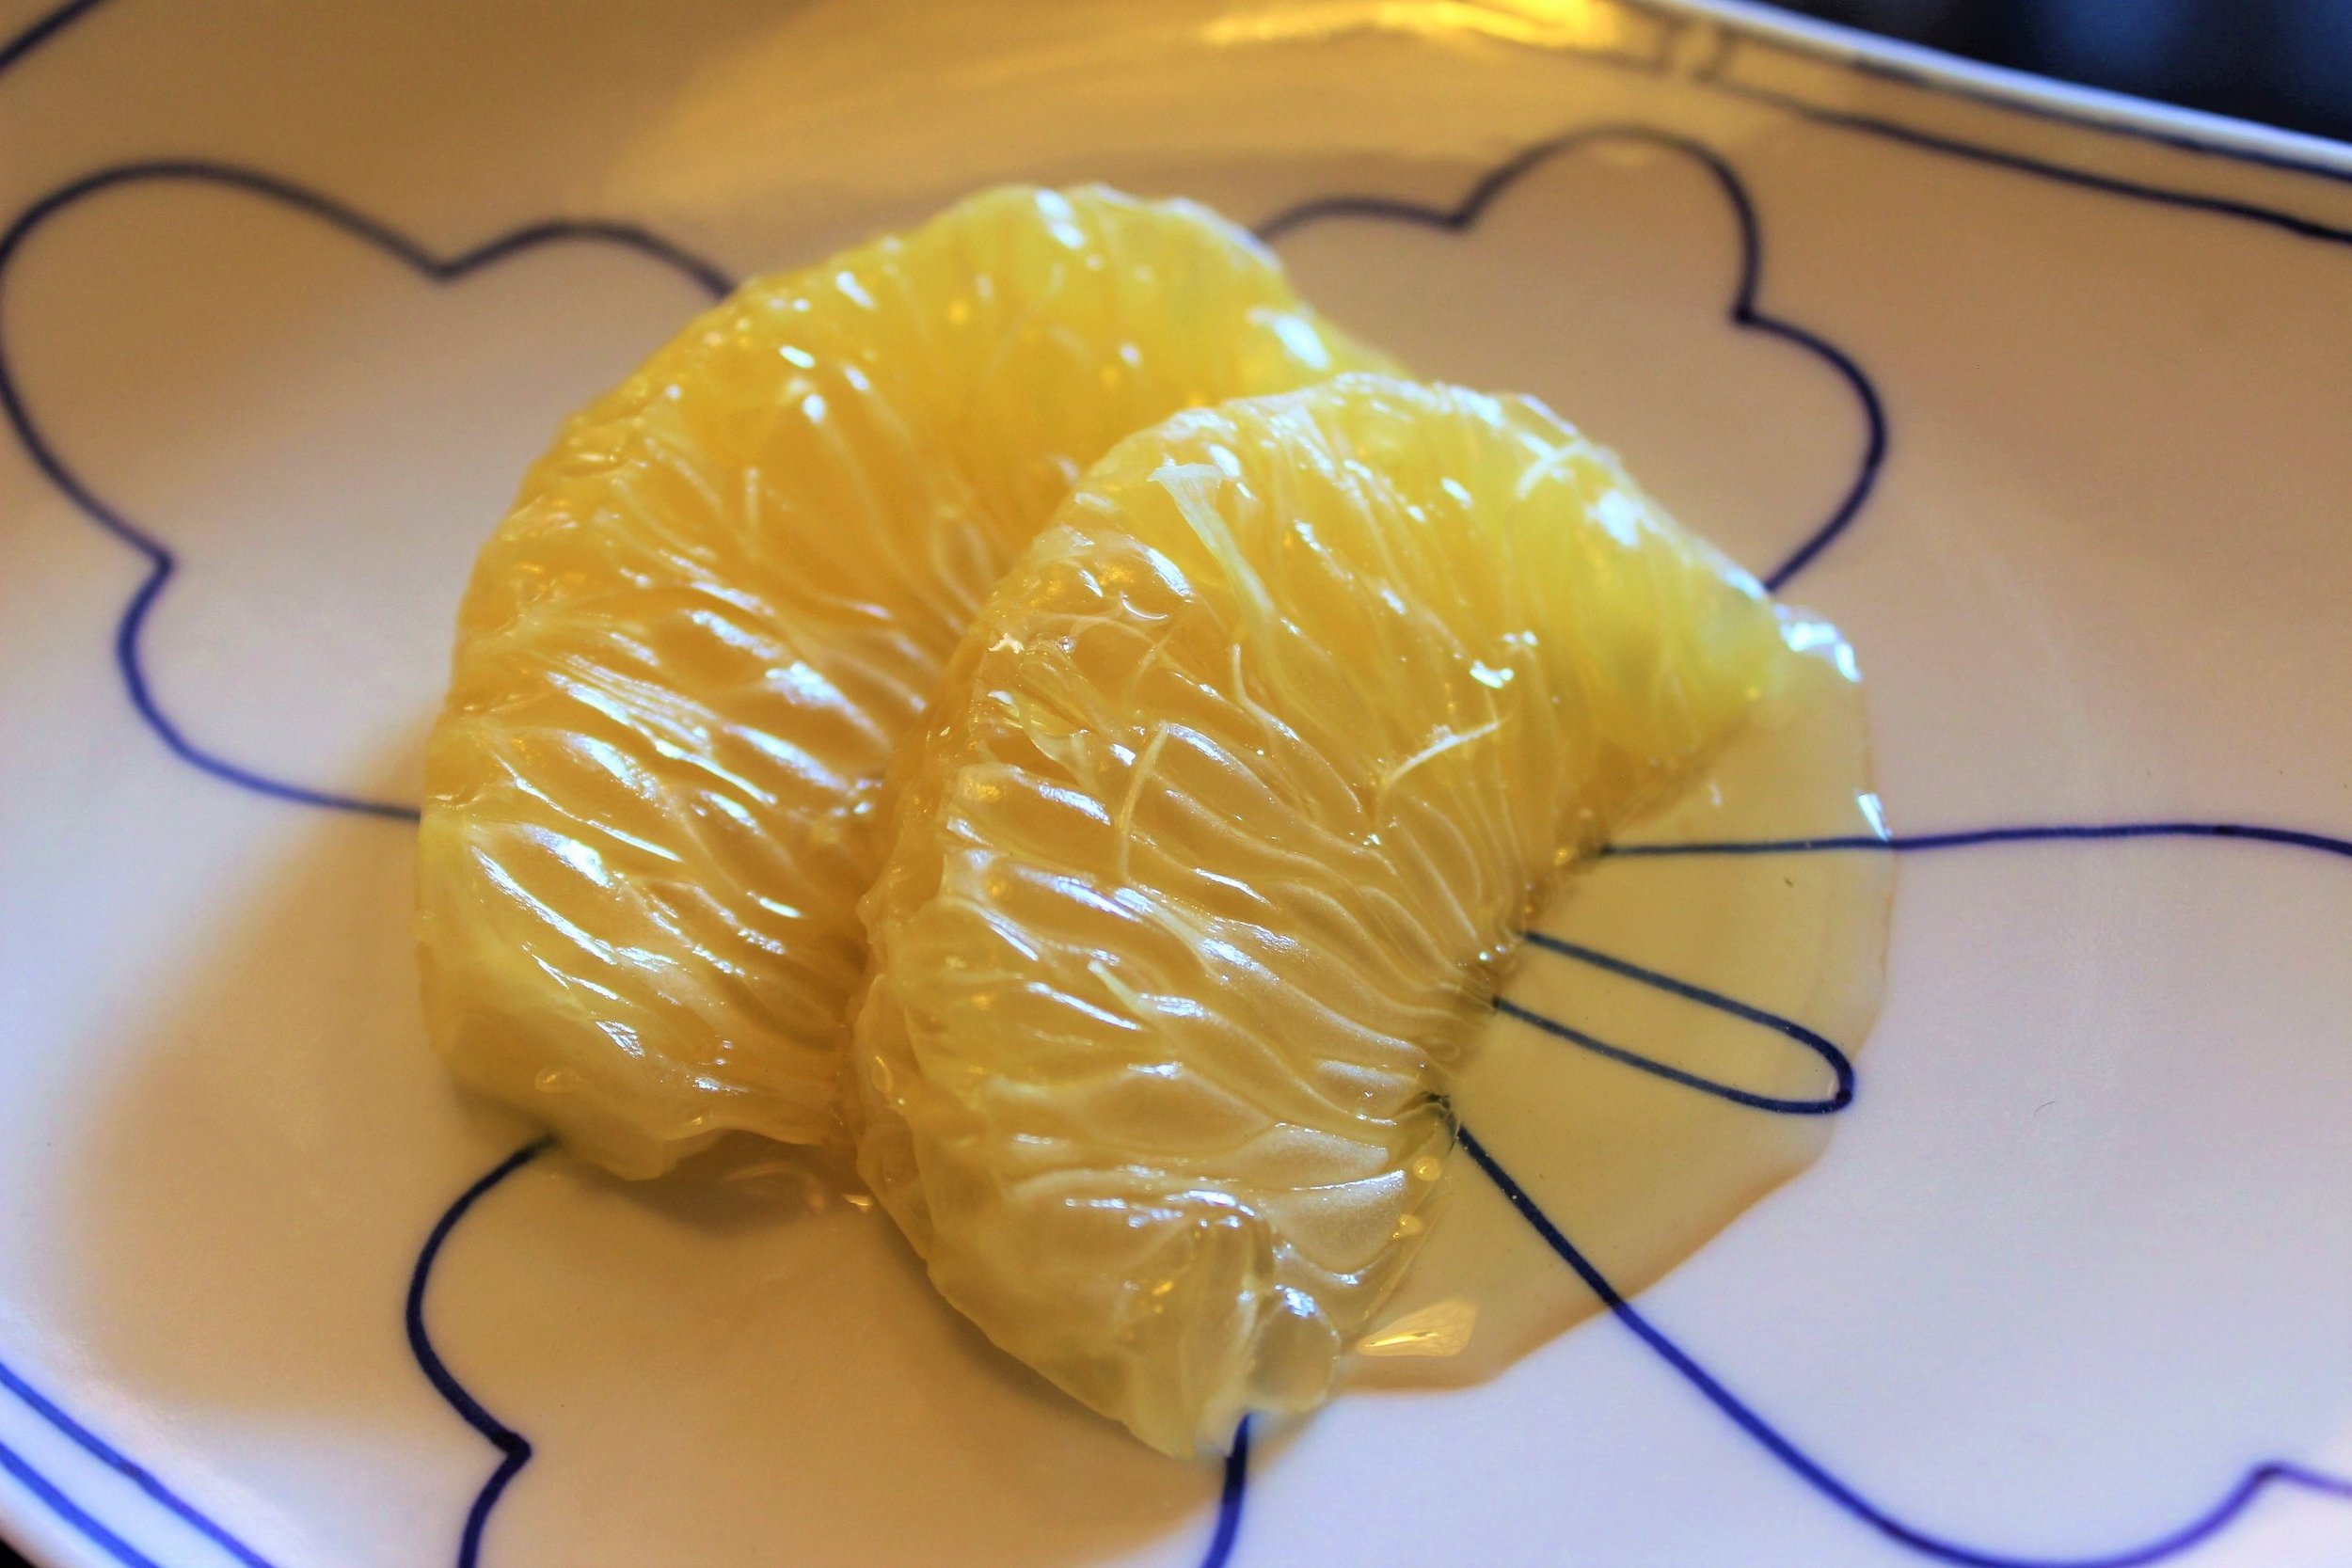 Hassaku Orange Coated with Honey at Tokyo Shiba Tofuya Ukai in Tokyo, Japan